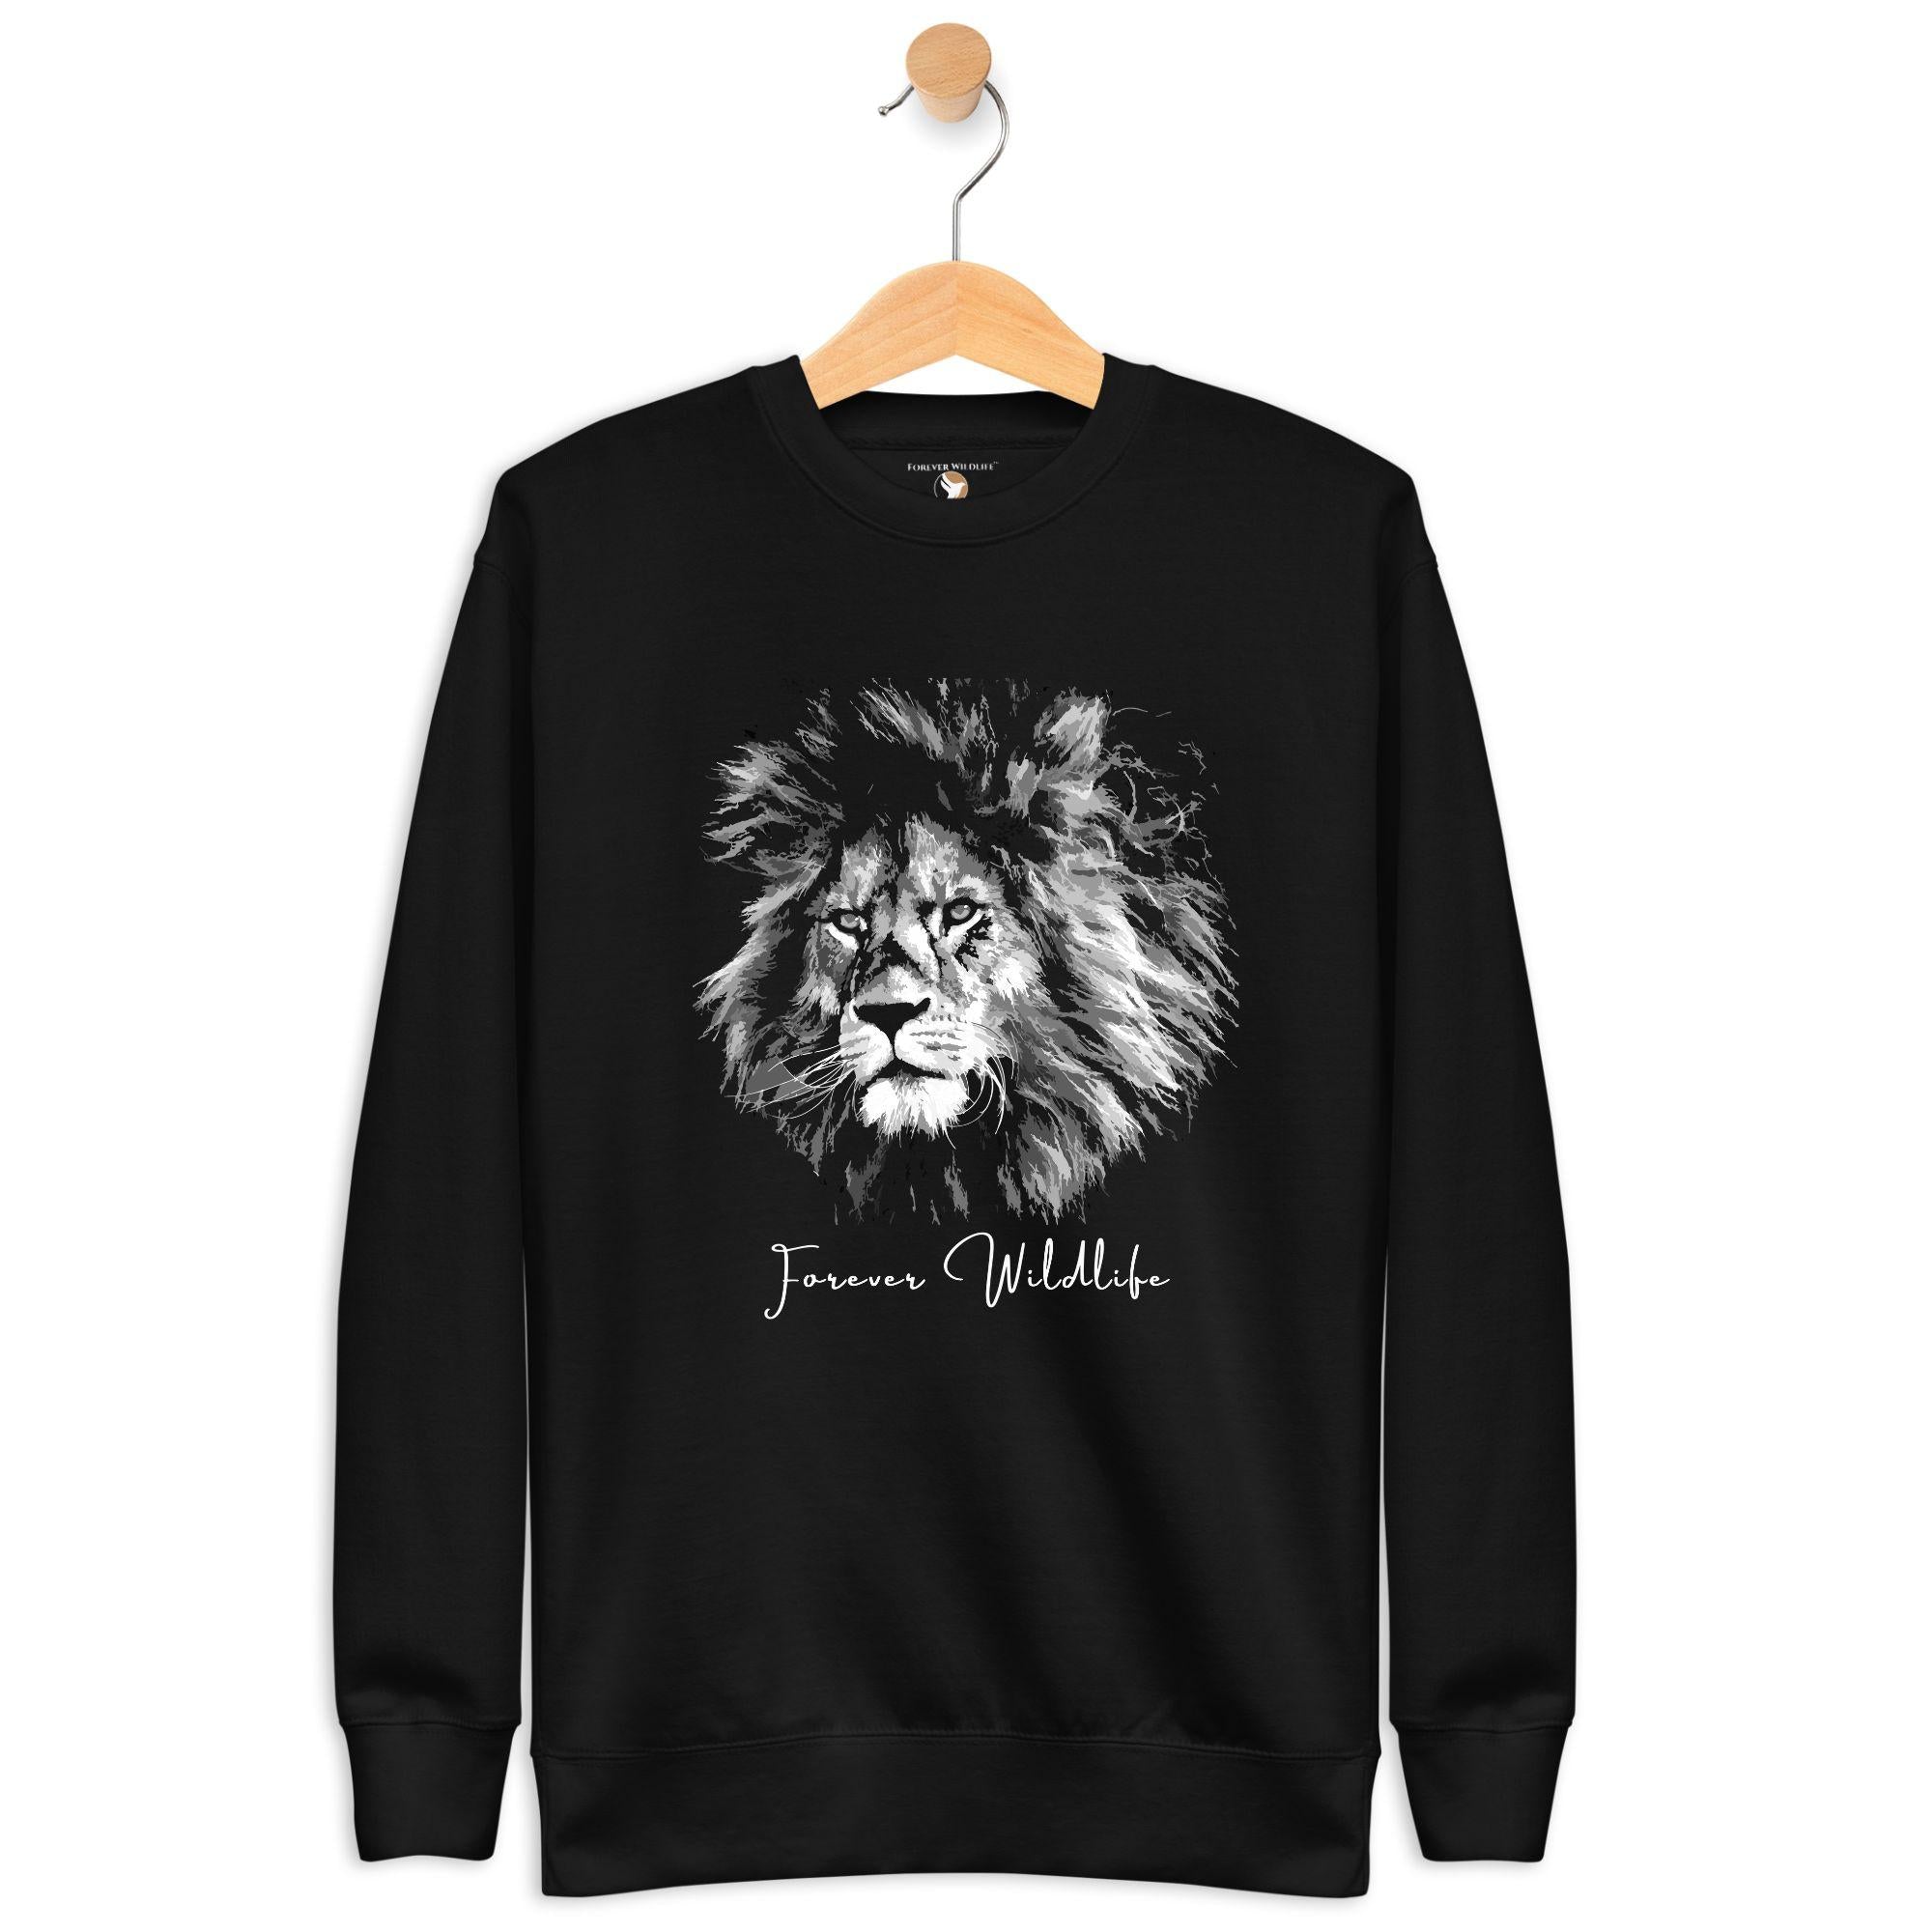 Lion Sweatshirt in Black-Premium Wildlife Animal Inspiration Sweatshirt Design, part of Wildlife Sweatshirts & Clothing from Forever Wildlife.